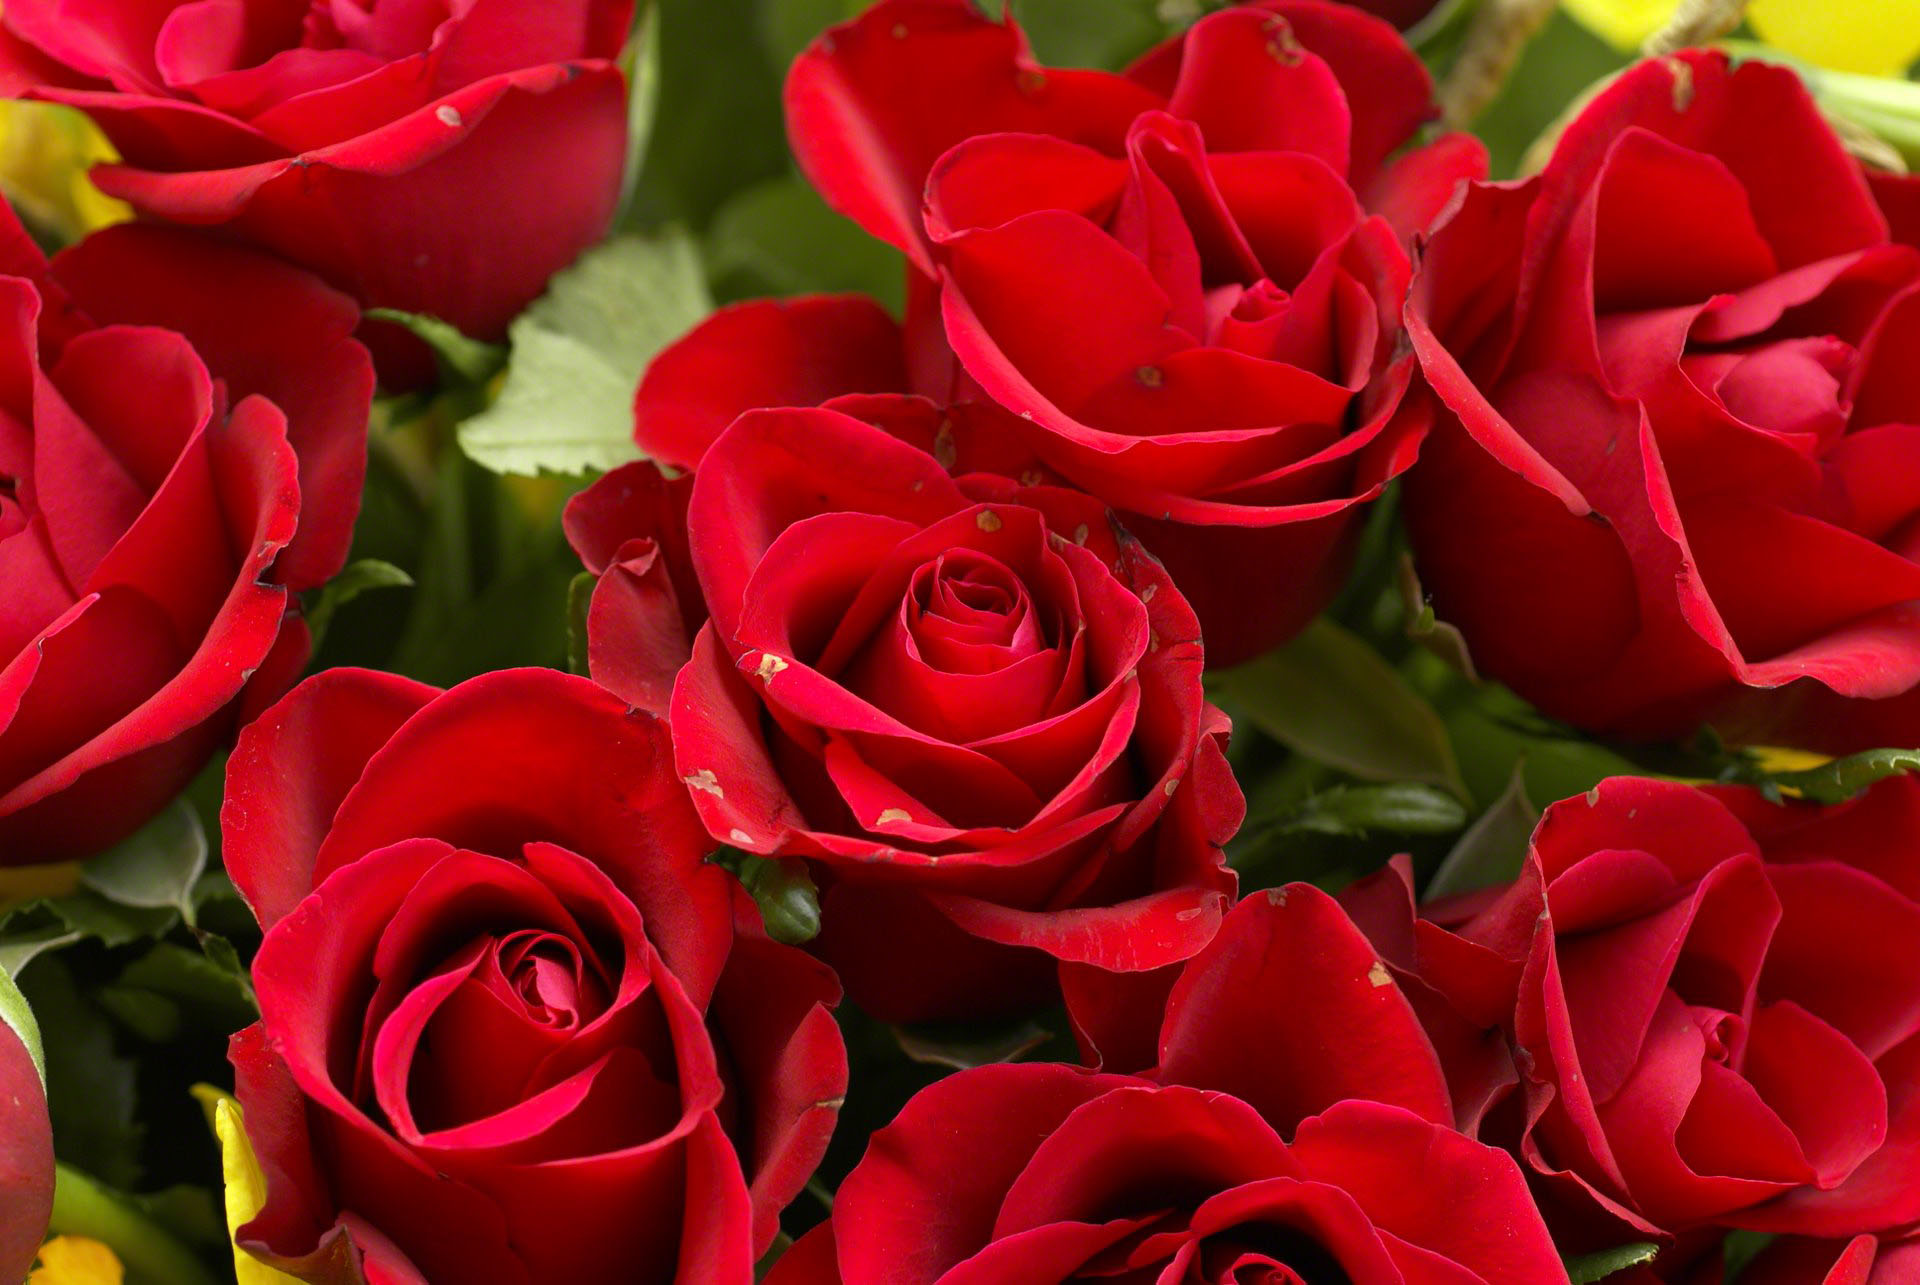 http://www.fabiovisentin.com/photography/photo/12/red-roses-bouquet-dsc01457.jpg